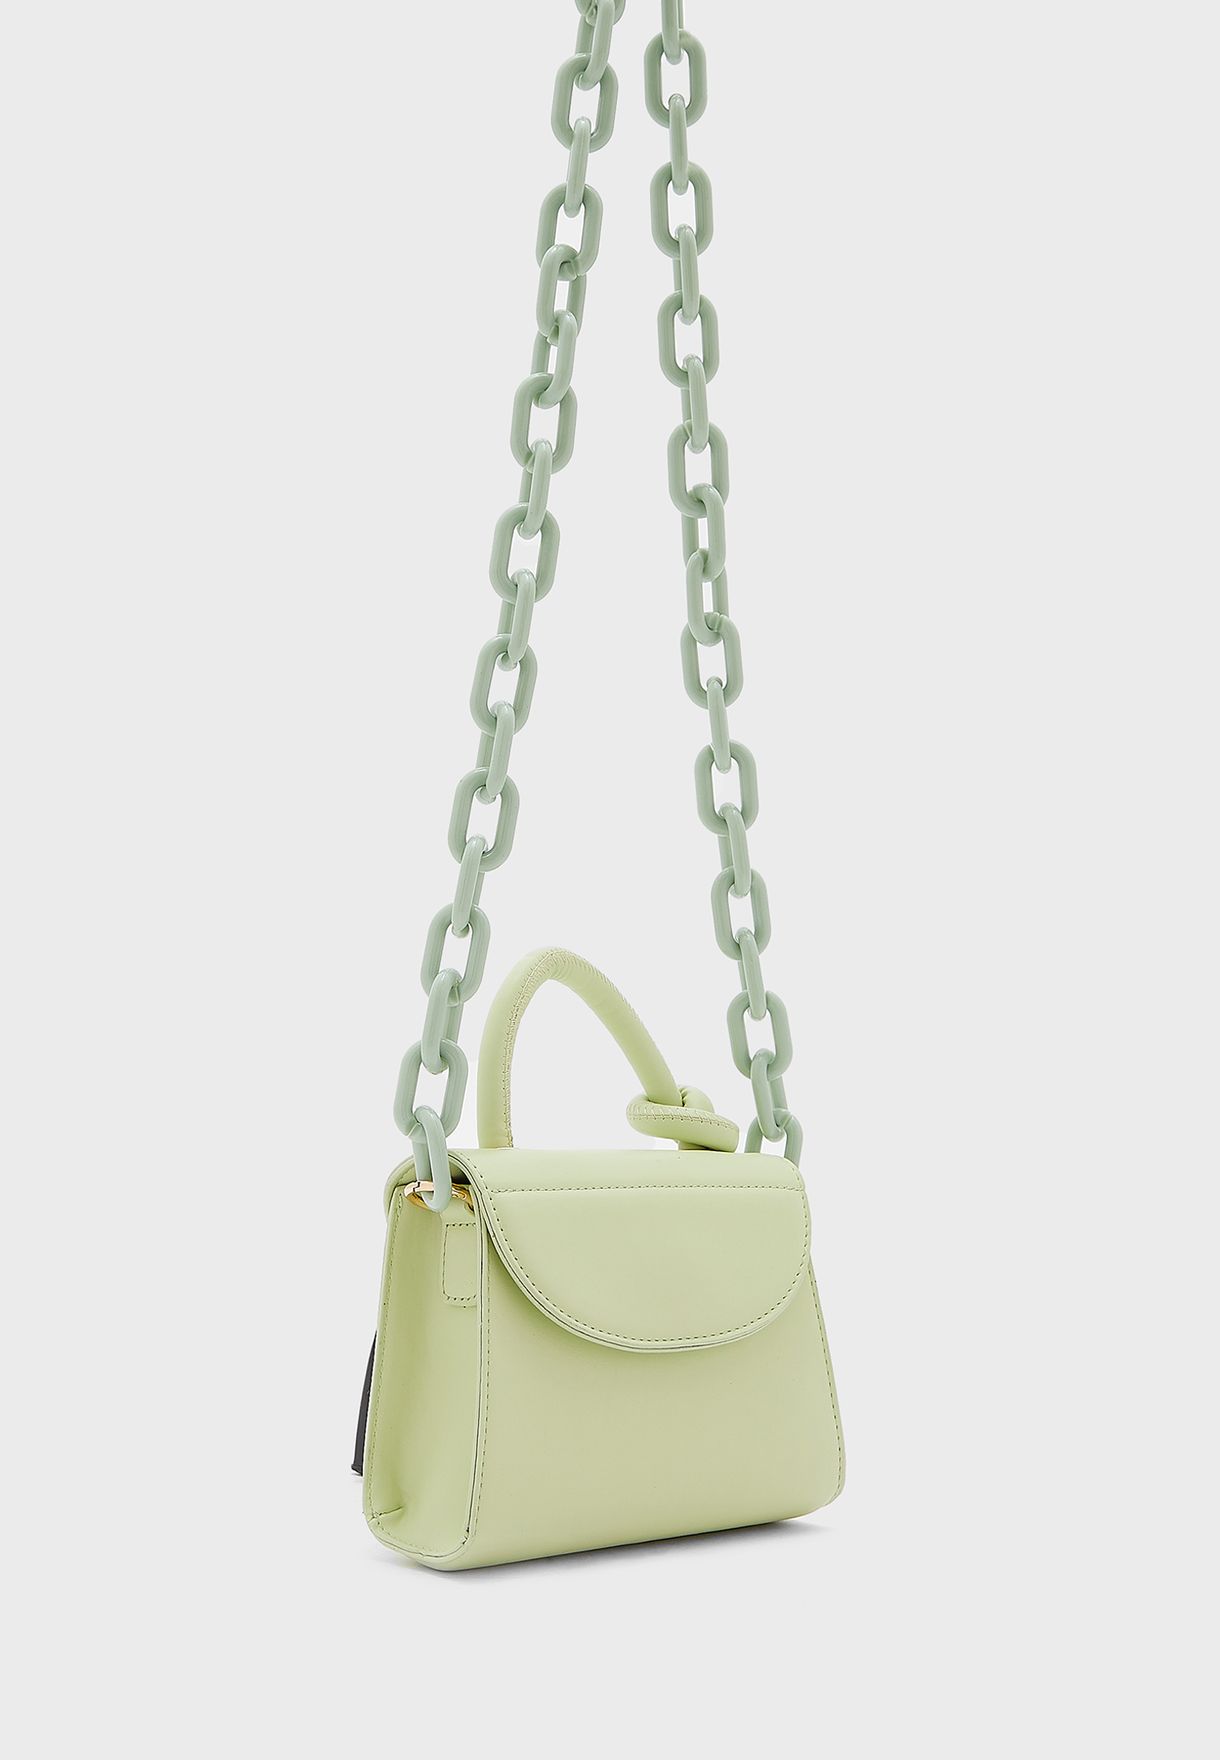 Mini Handbag With Knot Handle And Chain Strap